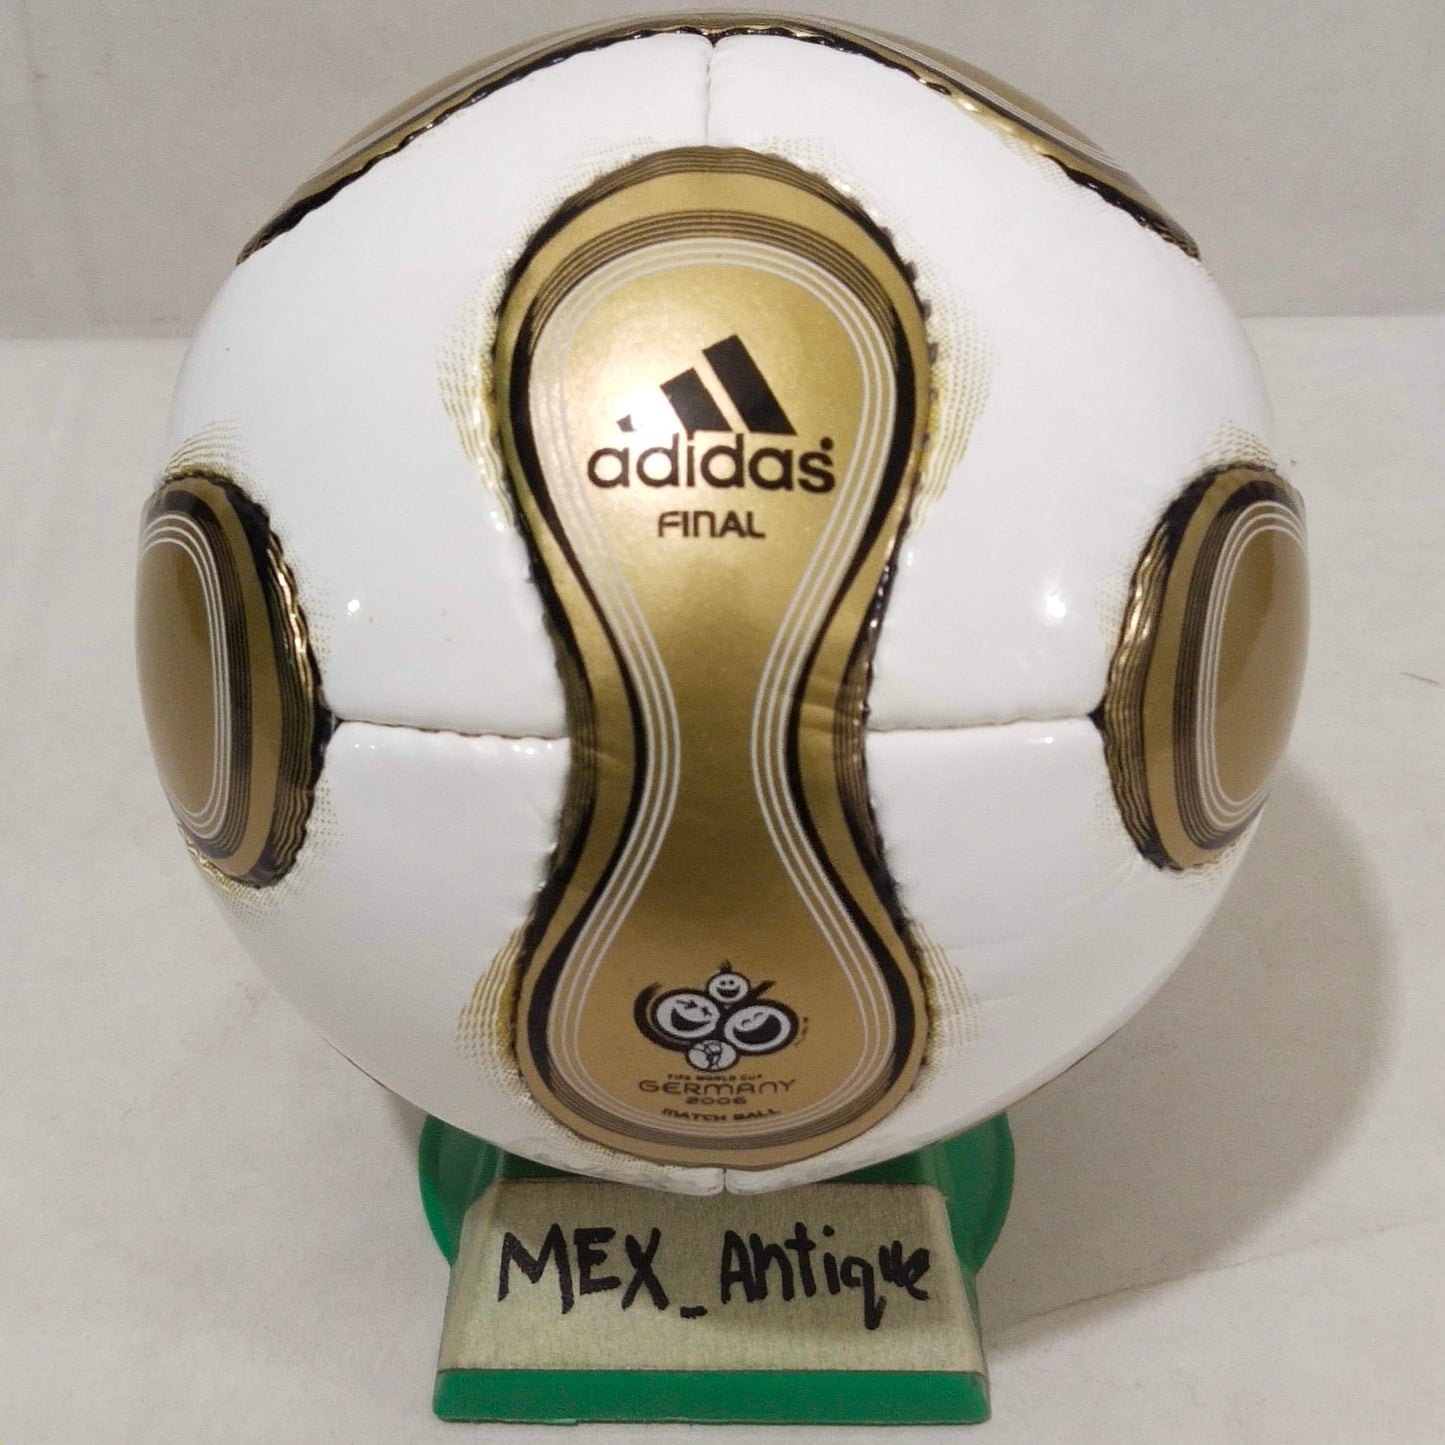 Adidas Teamgeist Berlin MINI | Final Ball | 2006 FIFA World Cup Ball 02